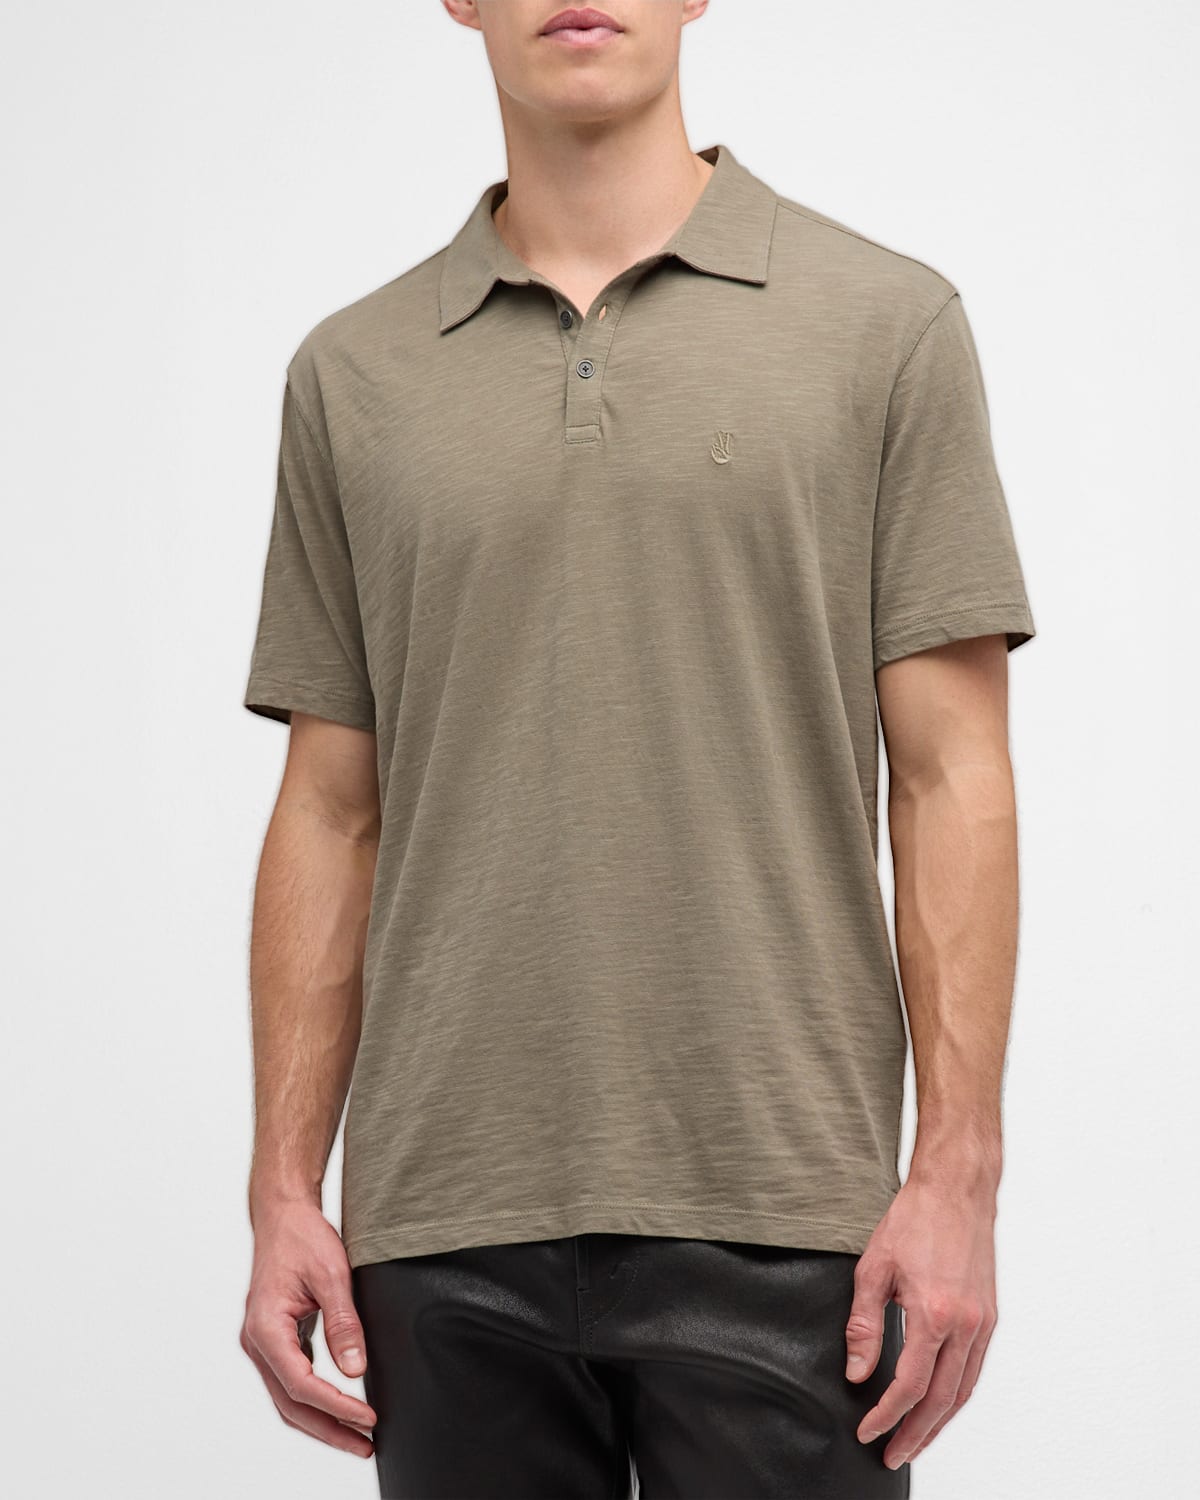 Men's Embroidered Cotton Polo Shirt